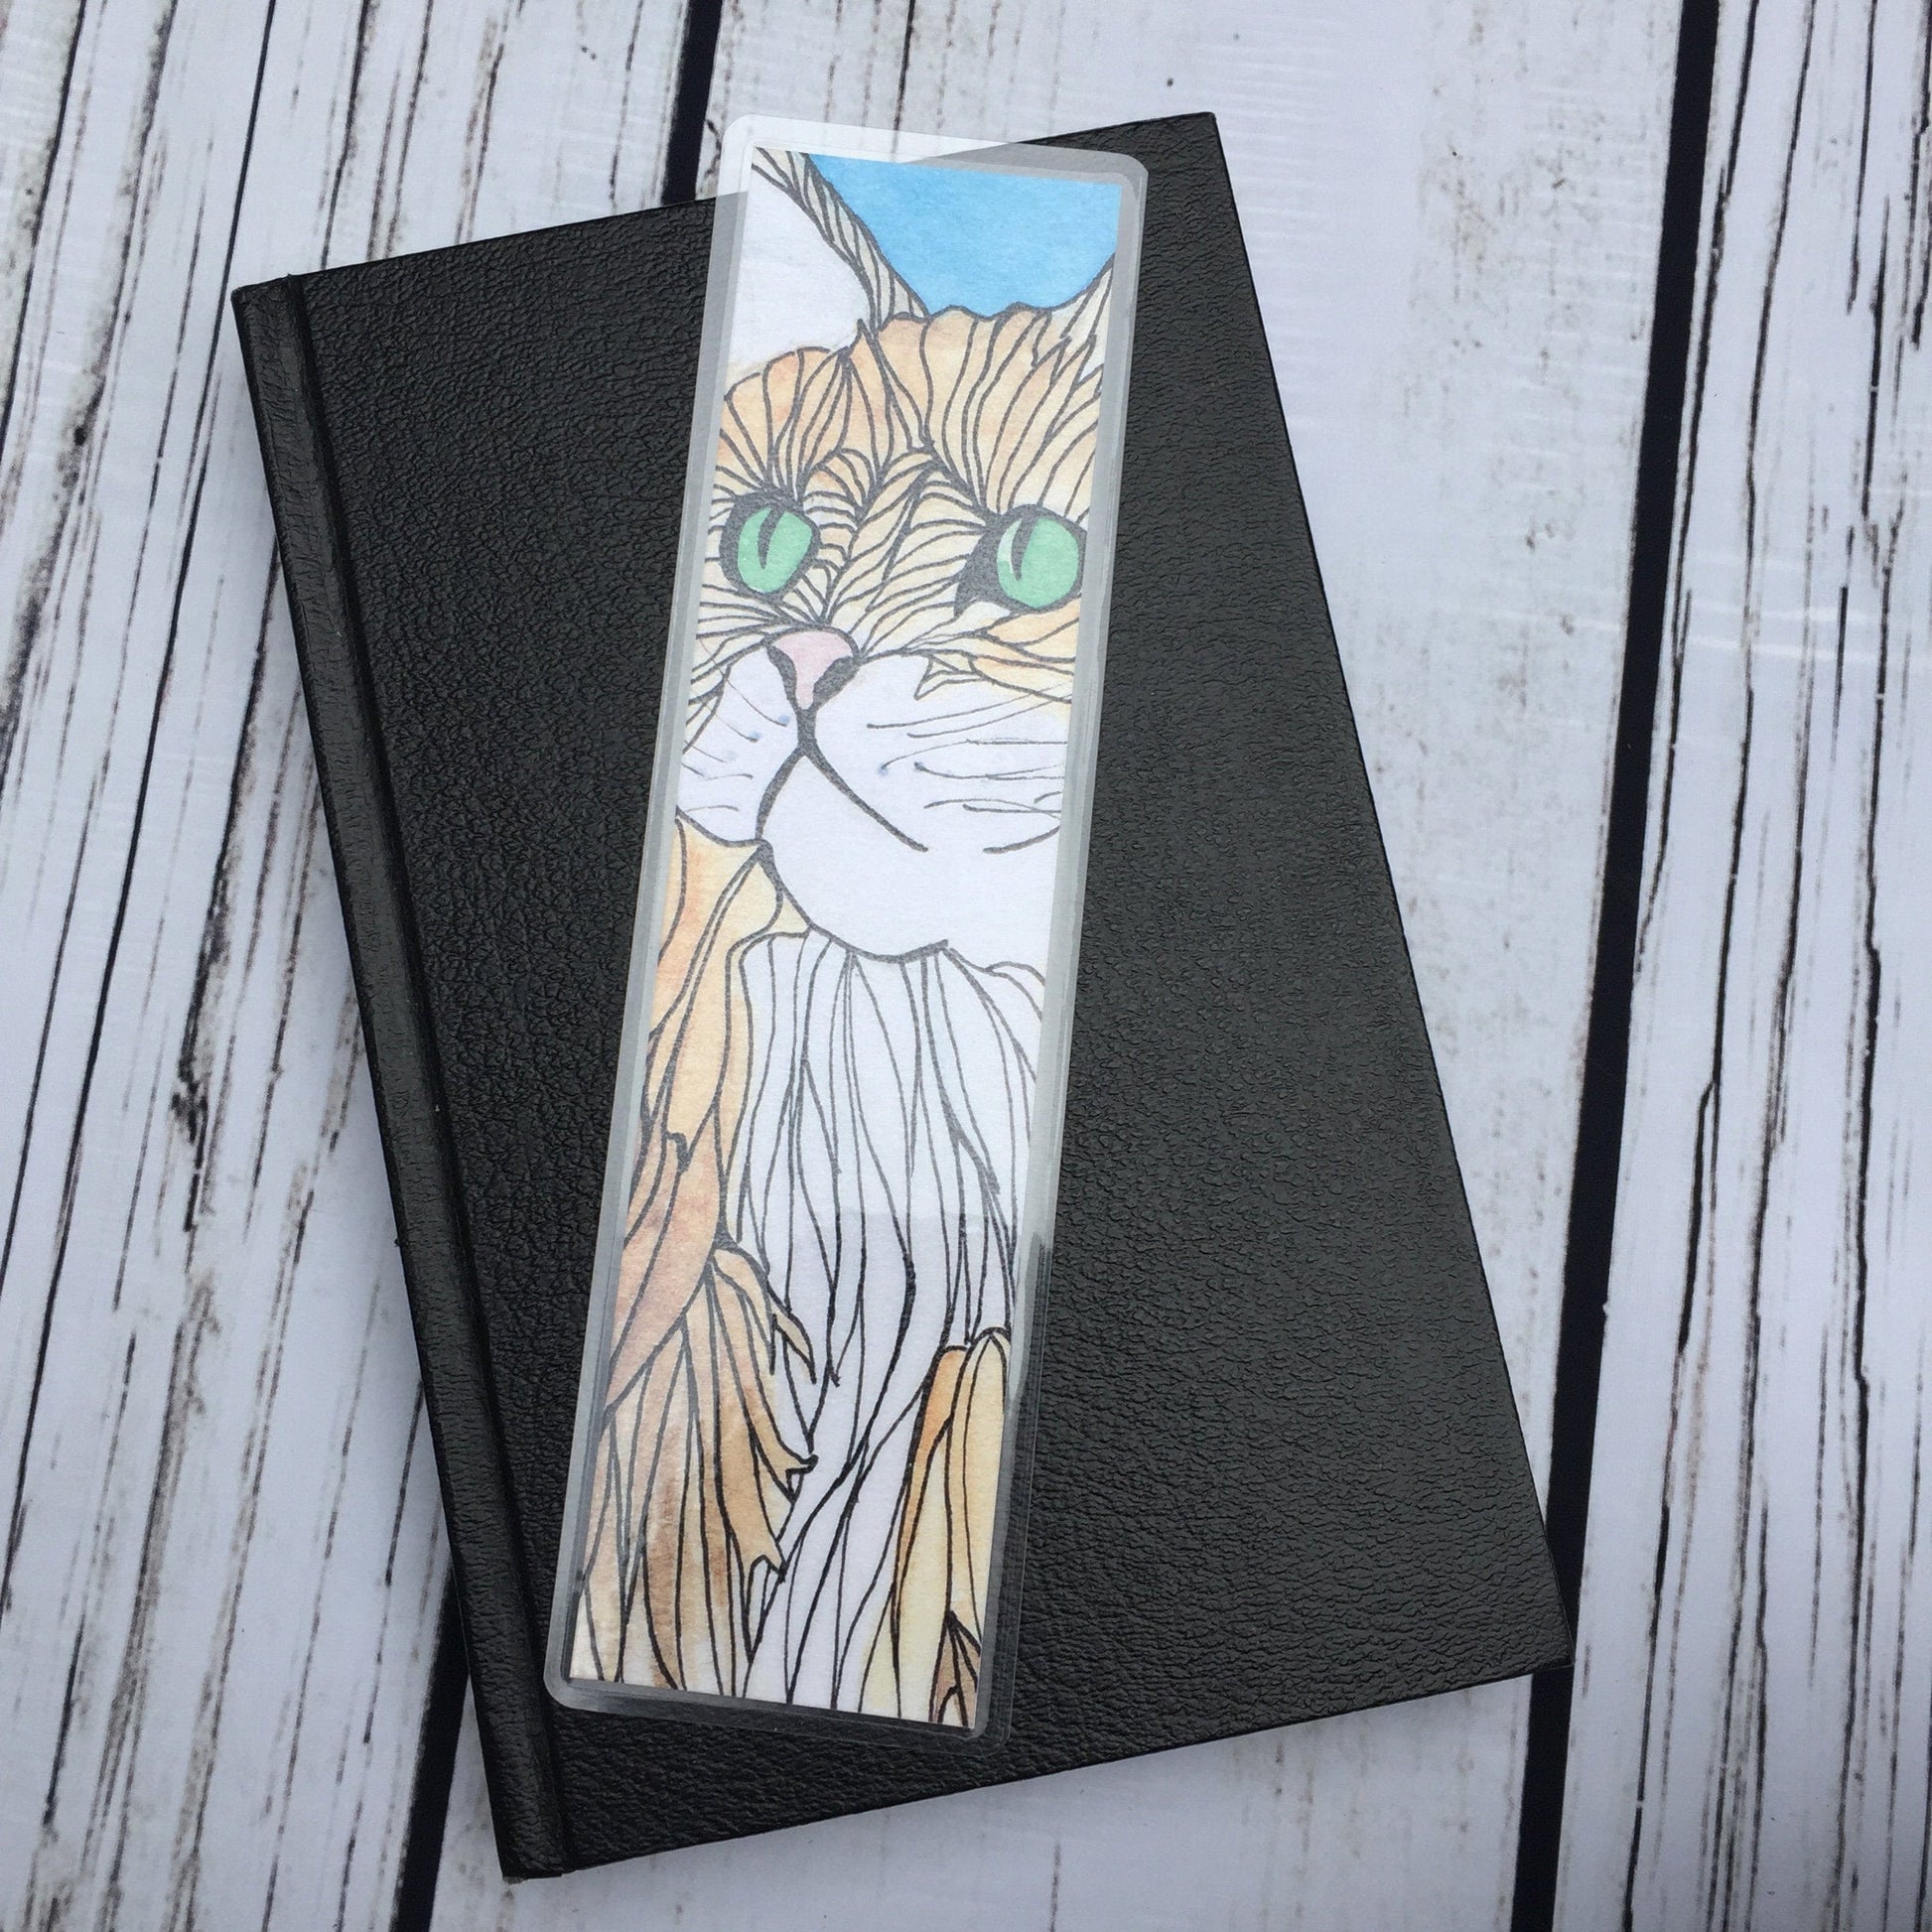 PinkPolish Design Bookmarks "Green Eyed Cat" 2-Sided Bookmark